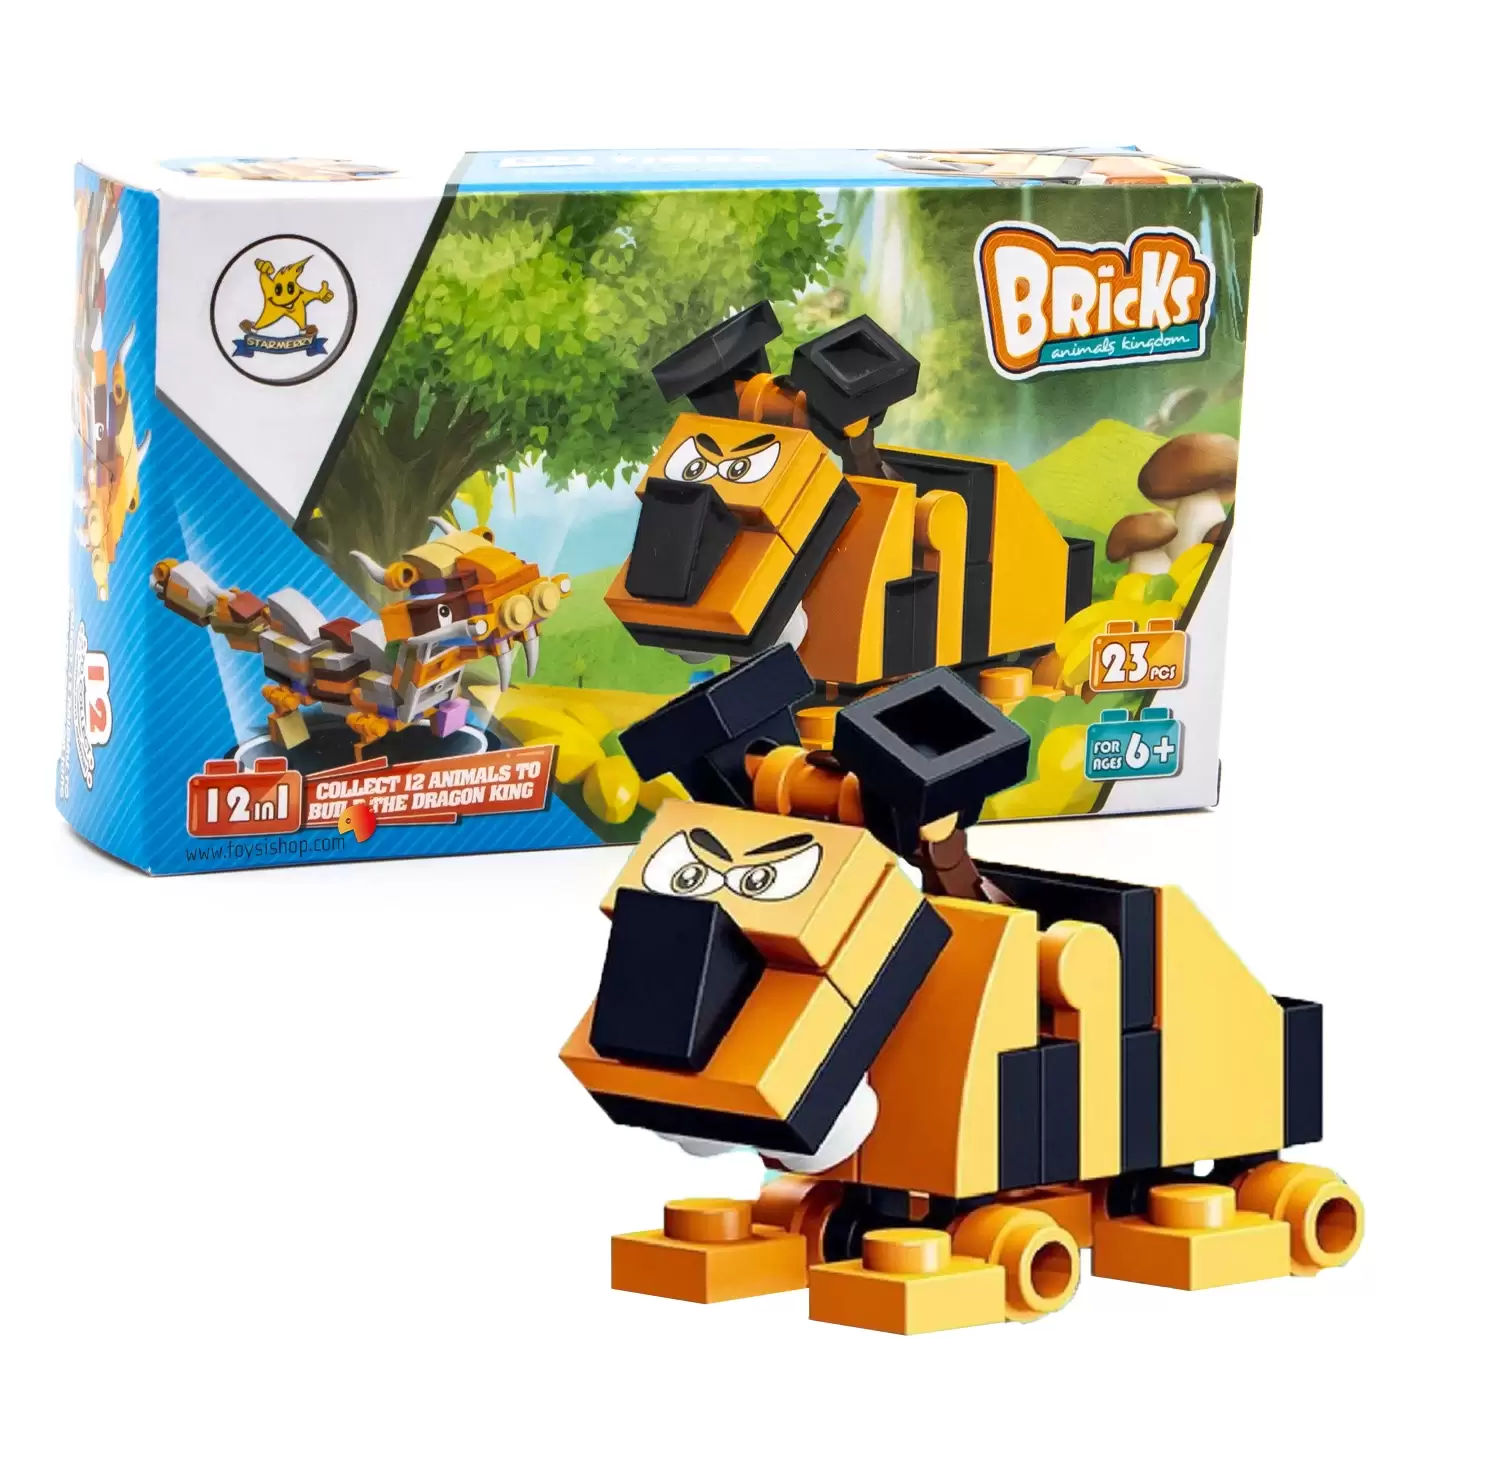 Bricks Tiger - Blok Oyuncak SM198B-03